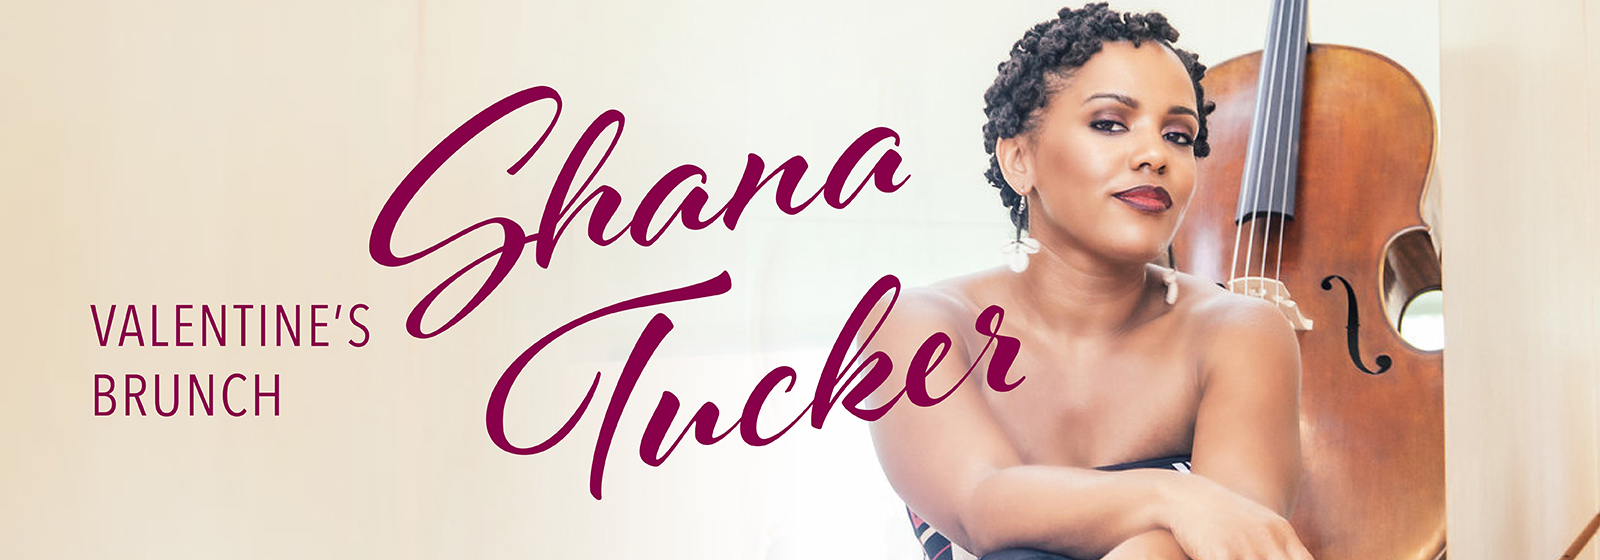 Shana Tucker: Valentine's Day Brunch